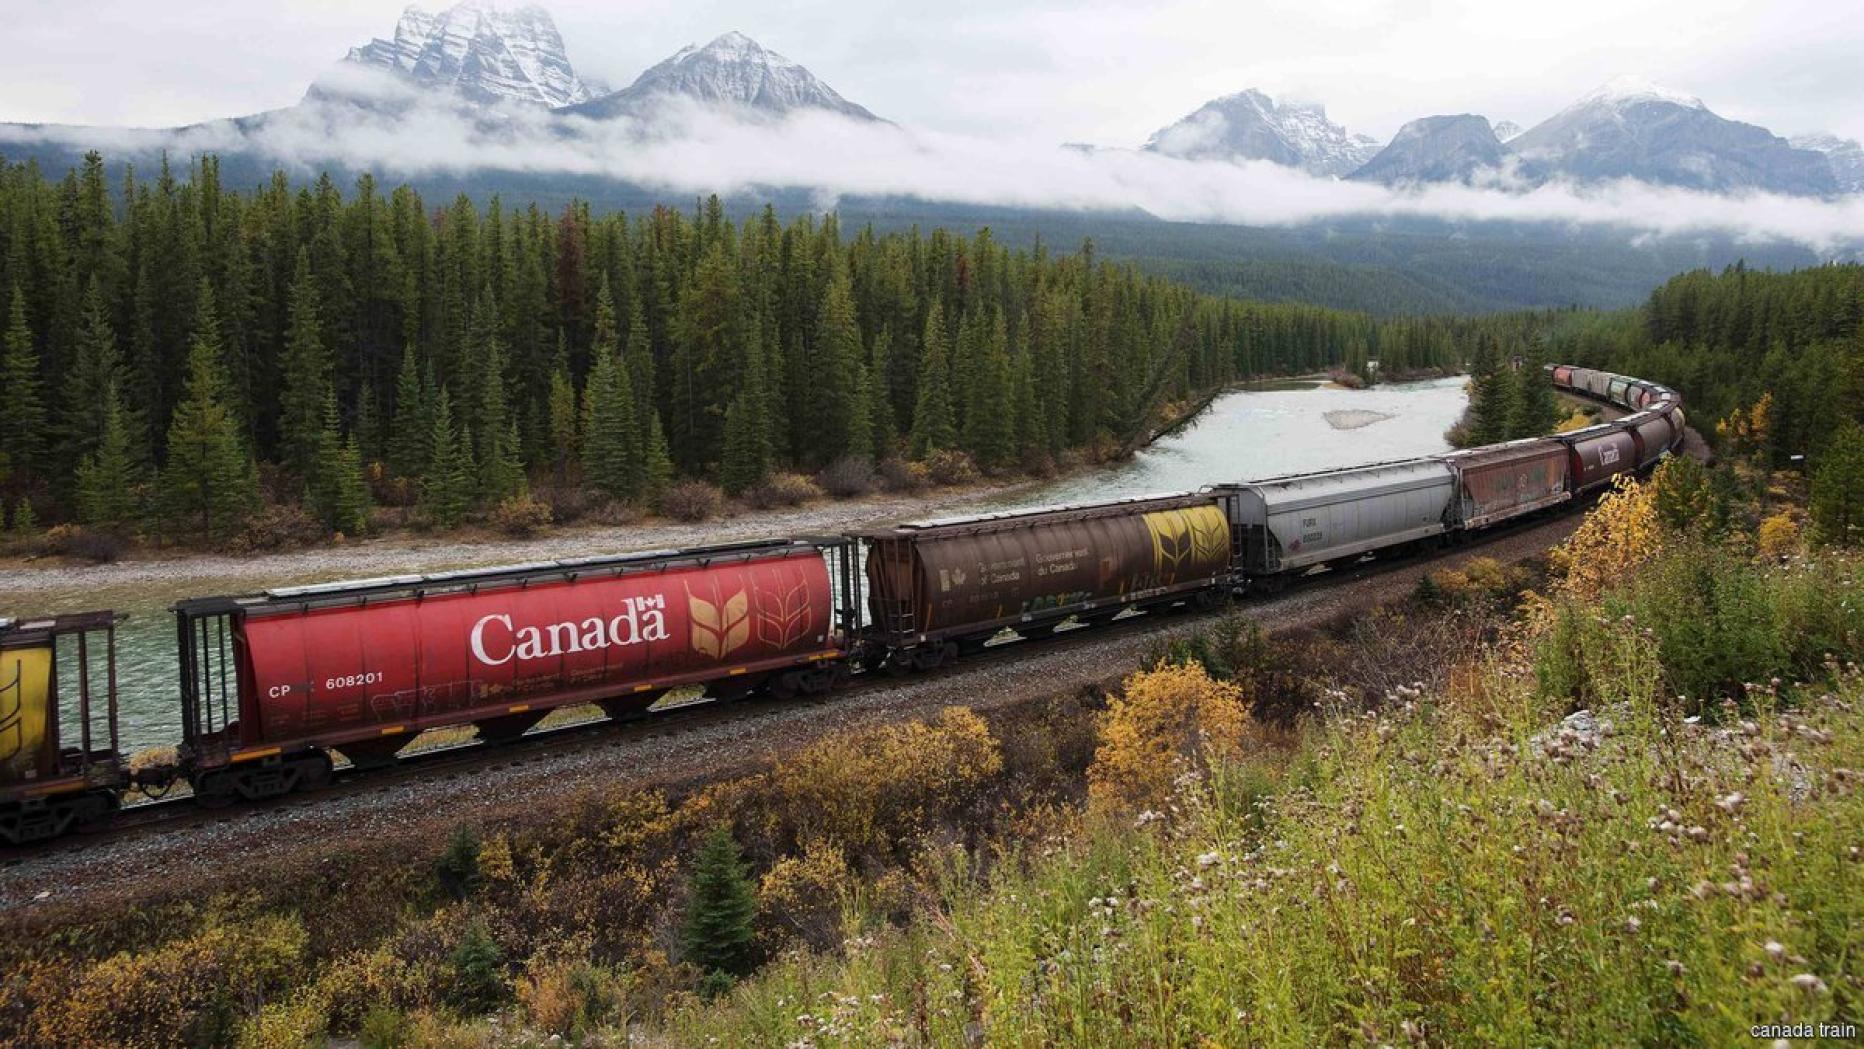 Vast country. Железная дорога Канадиан Пасифик. Канадская Тихоокеанская железная дорога. Железная дорога США, вагоны грузовые. Канадская трансконтинентальная железная дорога.